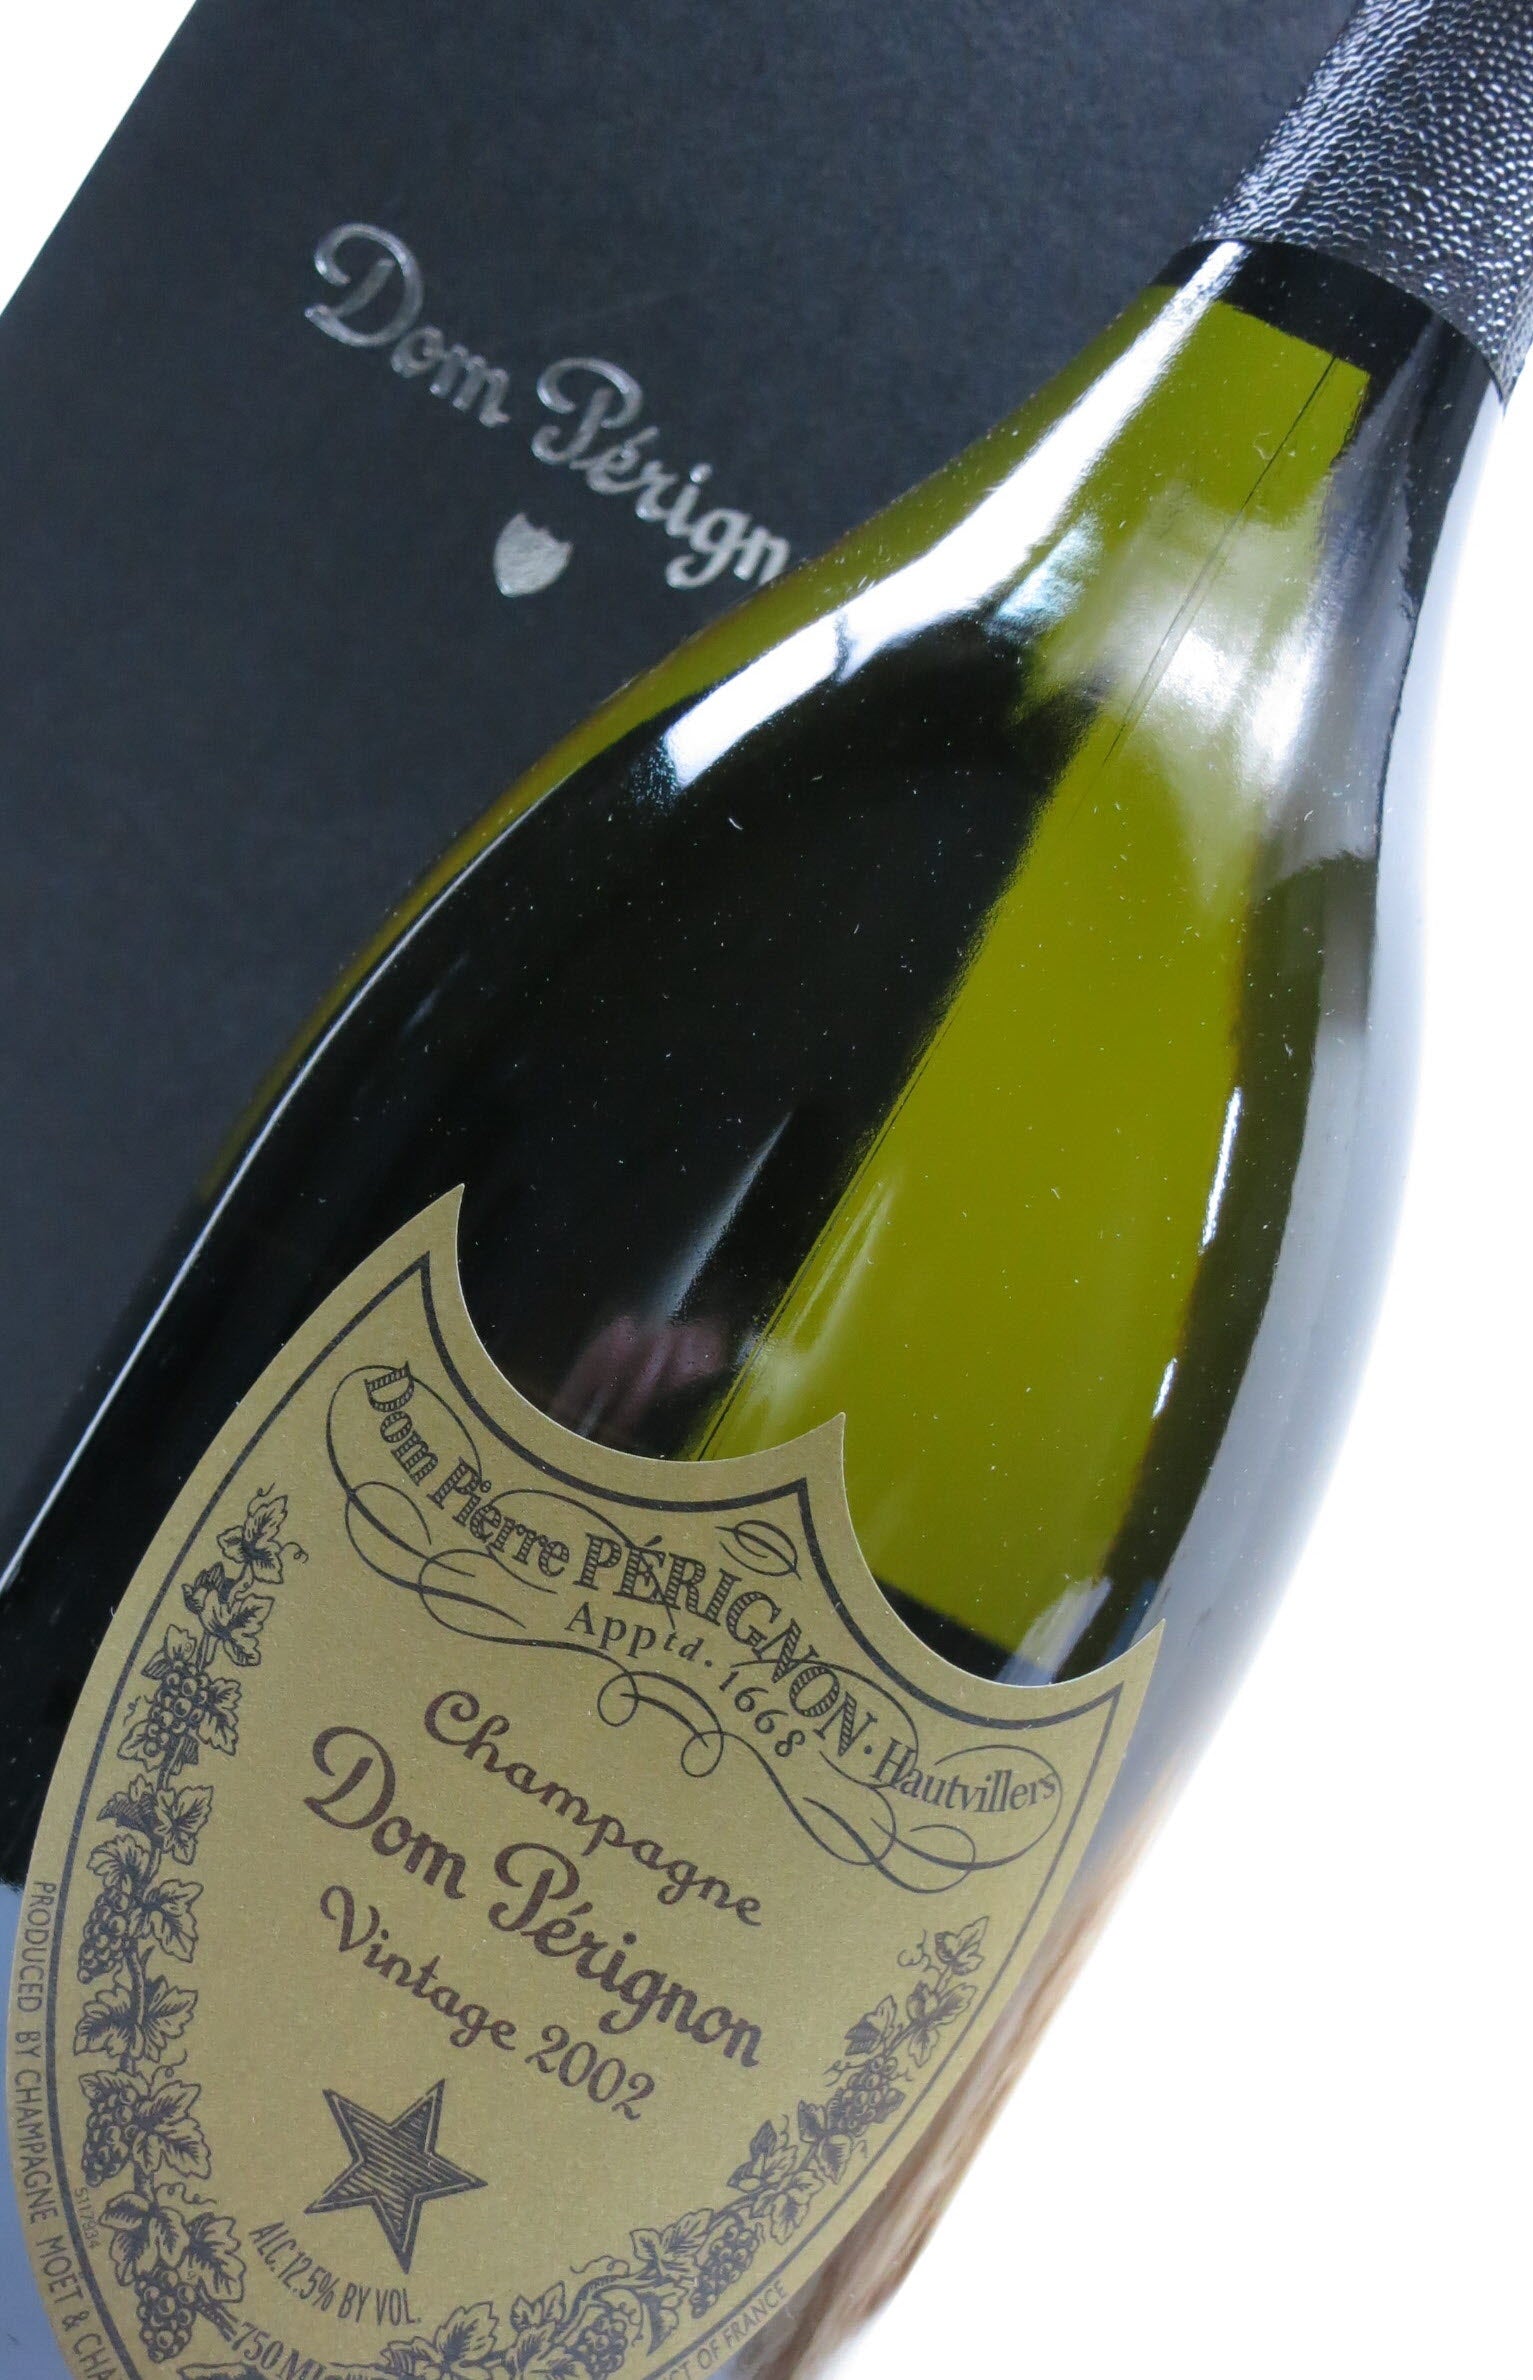 Don Perignon Champagne, Rose, Vintage 2002 - 750 ml